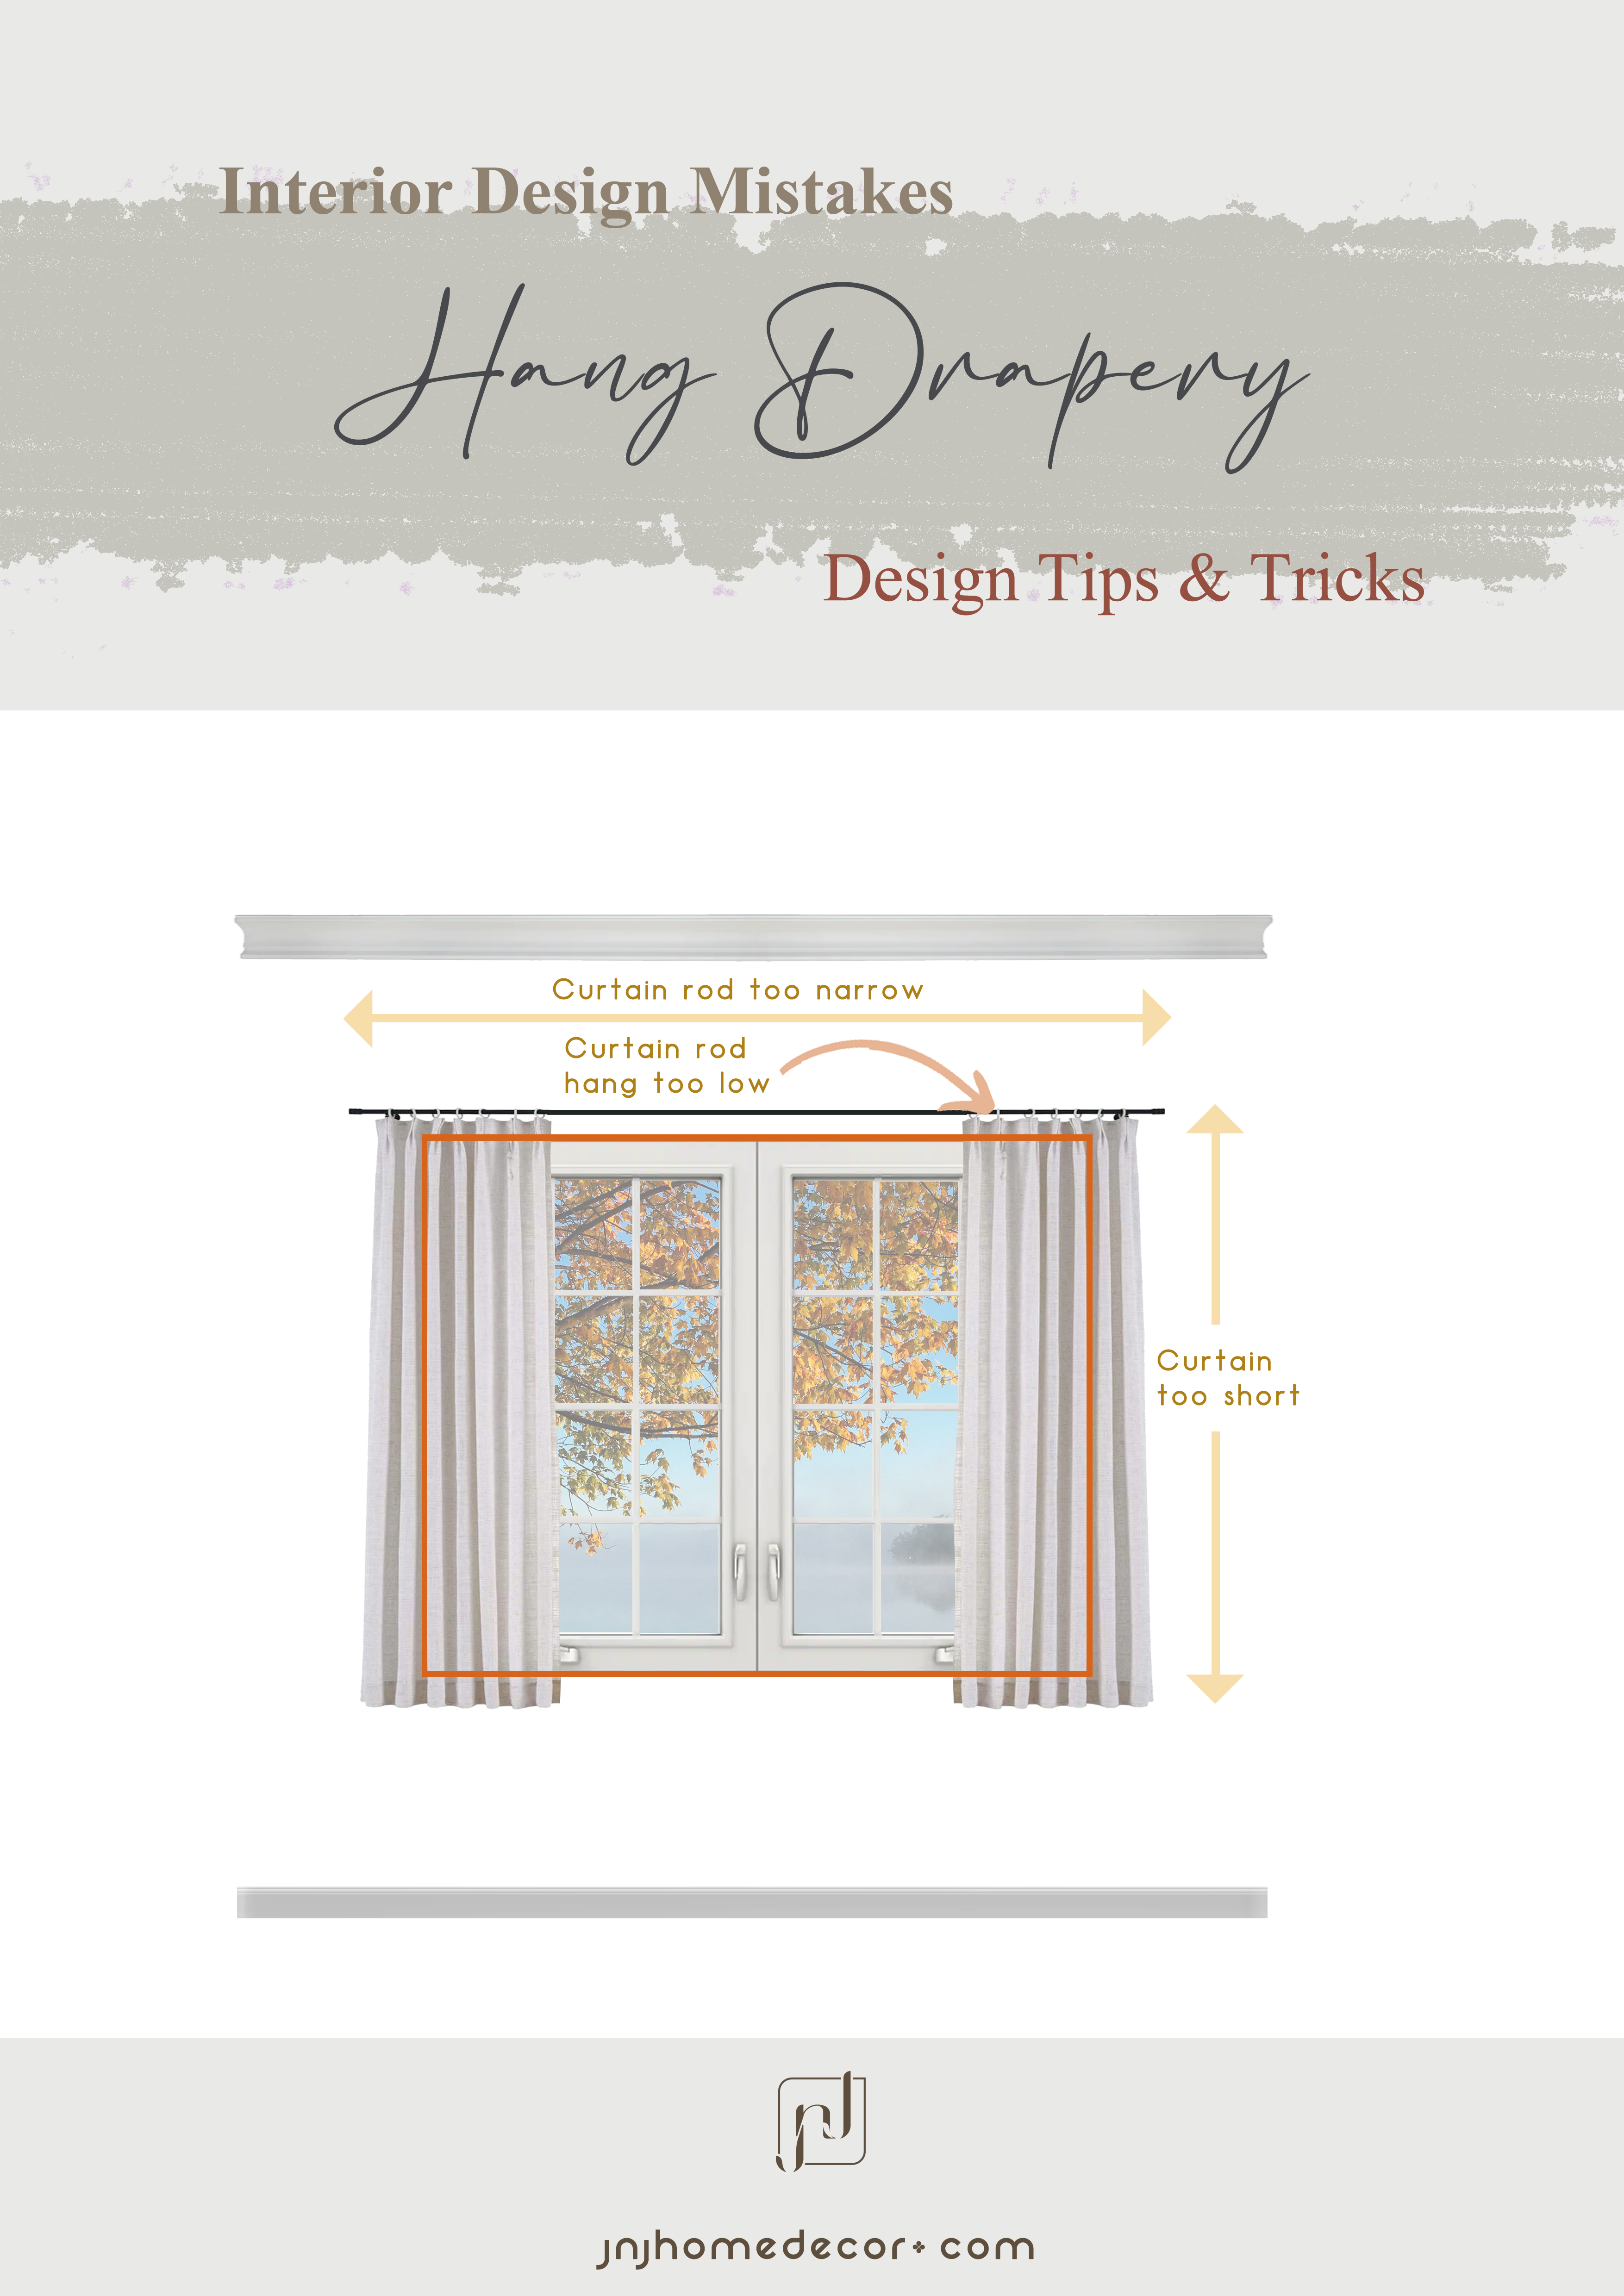 Interior design mistakes hang drapery